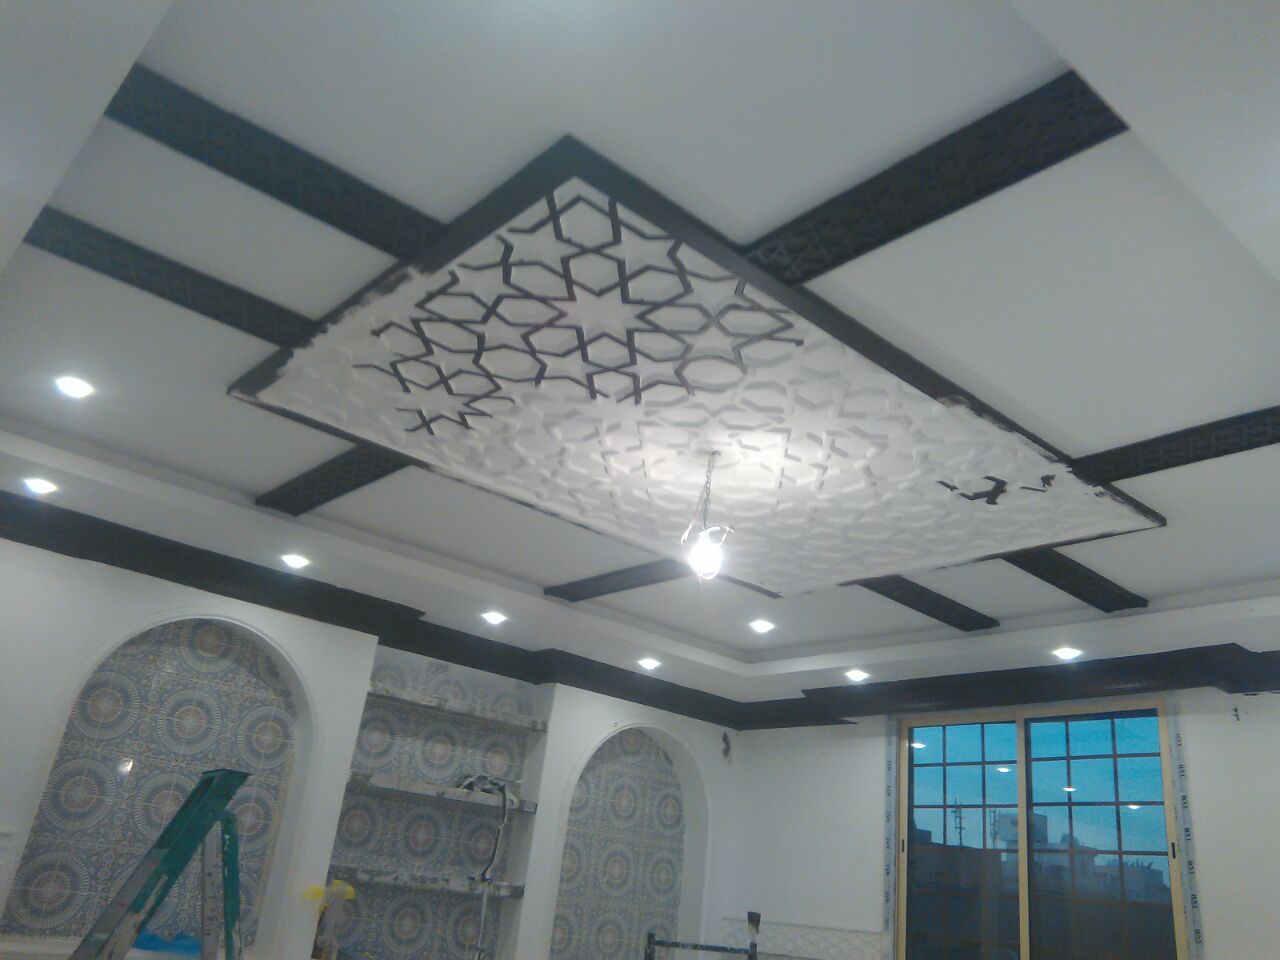 Building paints work and jypsum partition work in abu dhbai